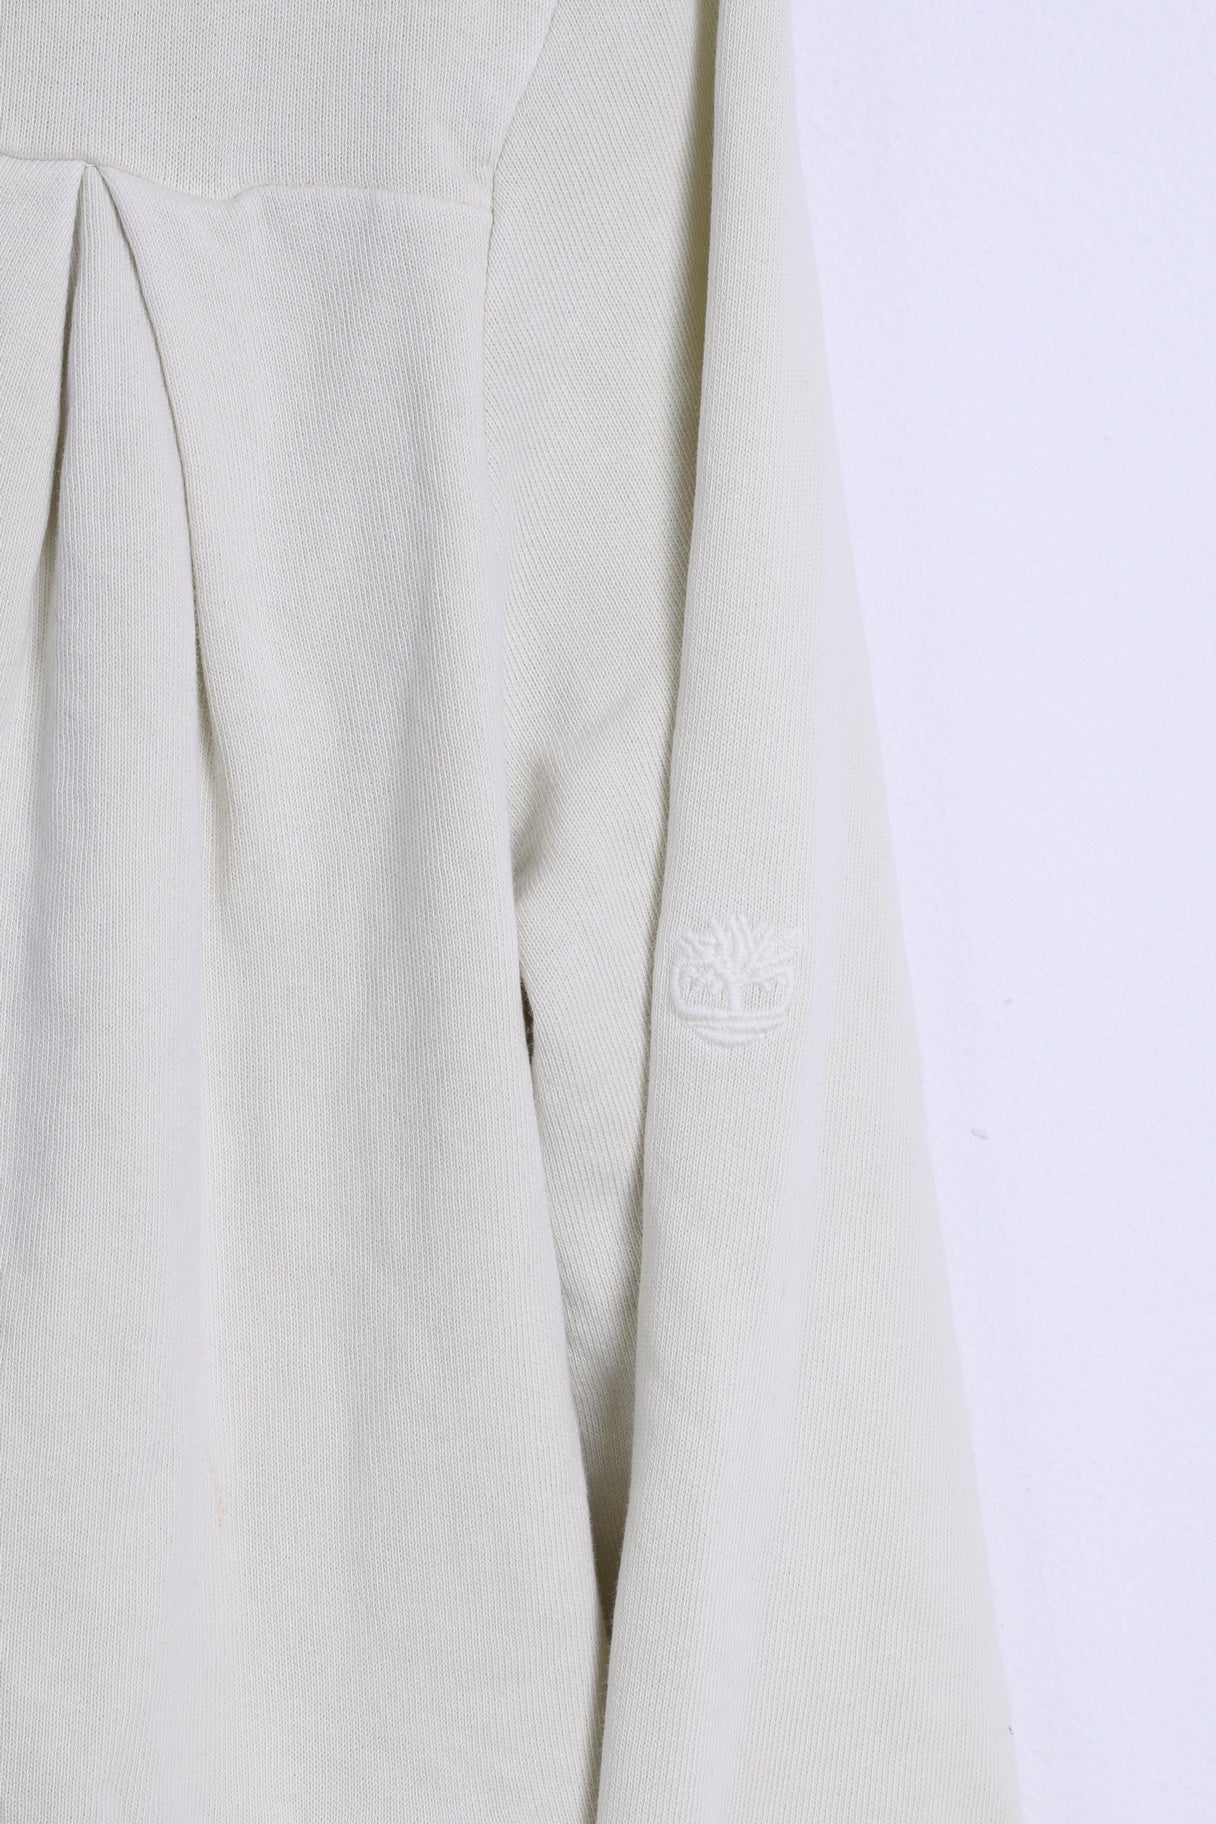 Timberland Womens S Sweatshirt Beige Buttoned Cotton Detailed Buttons Top